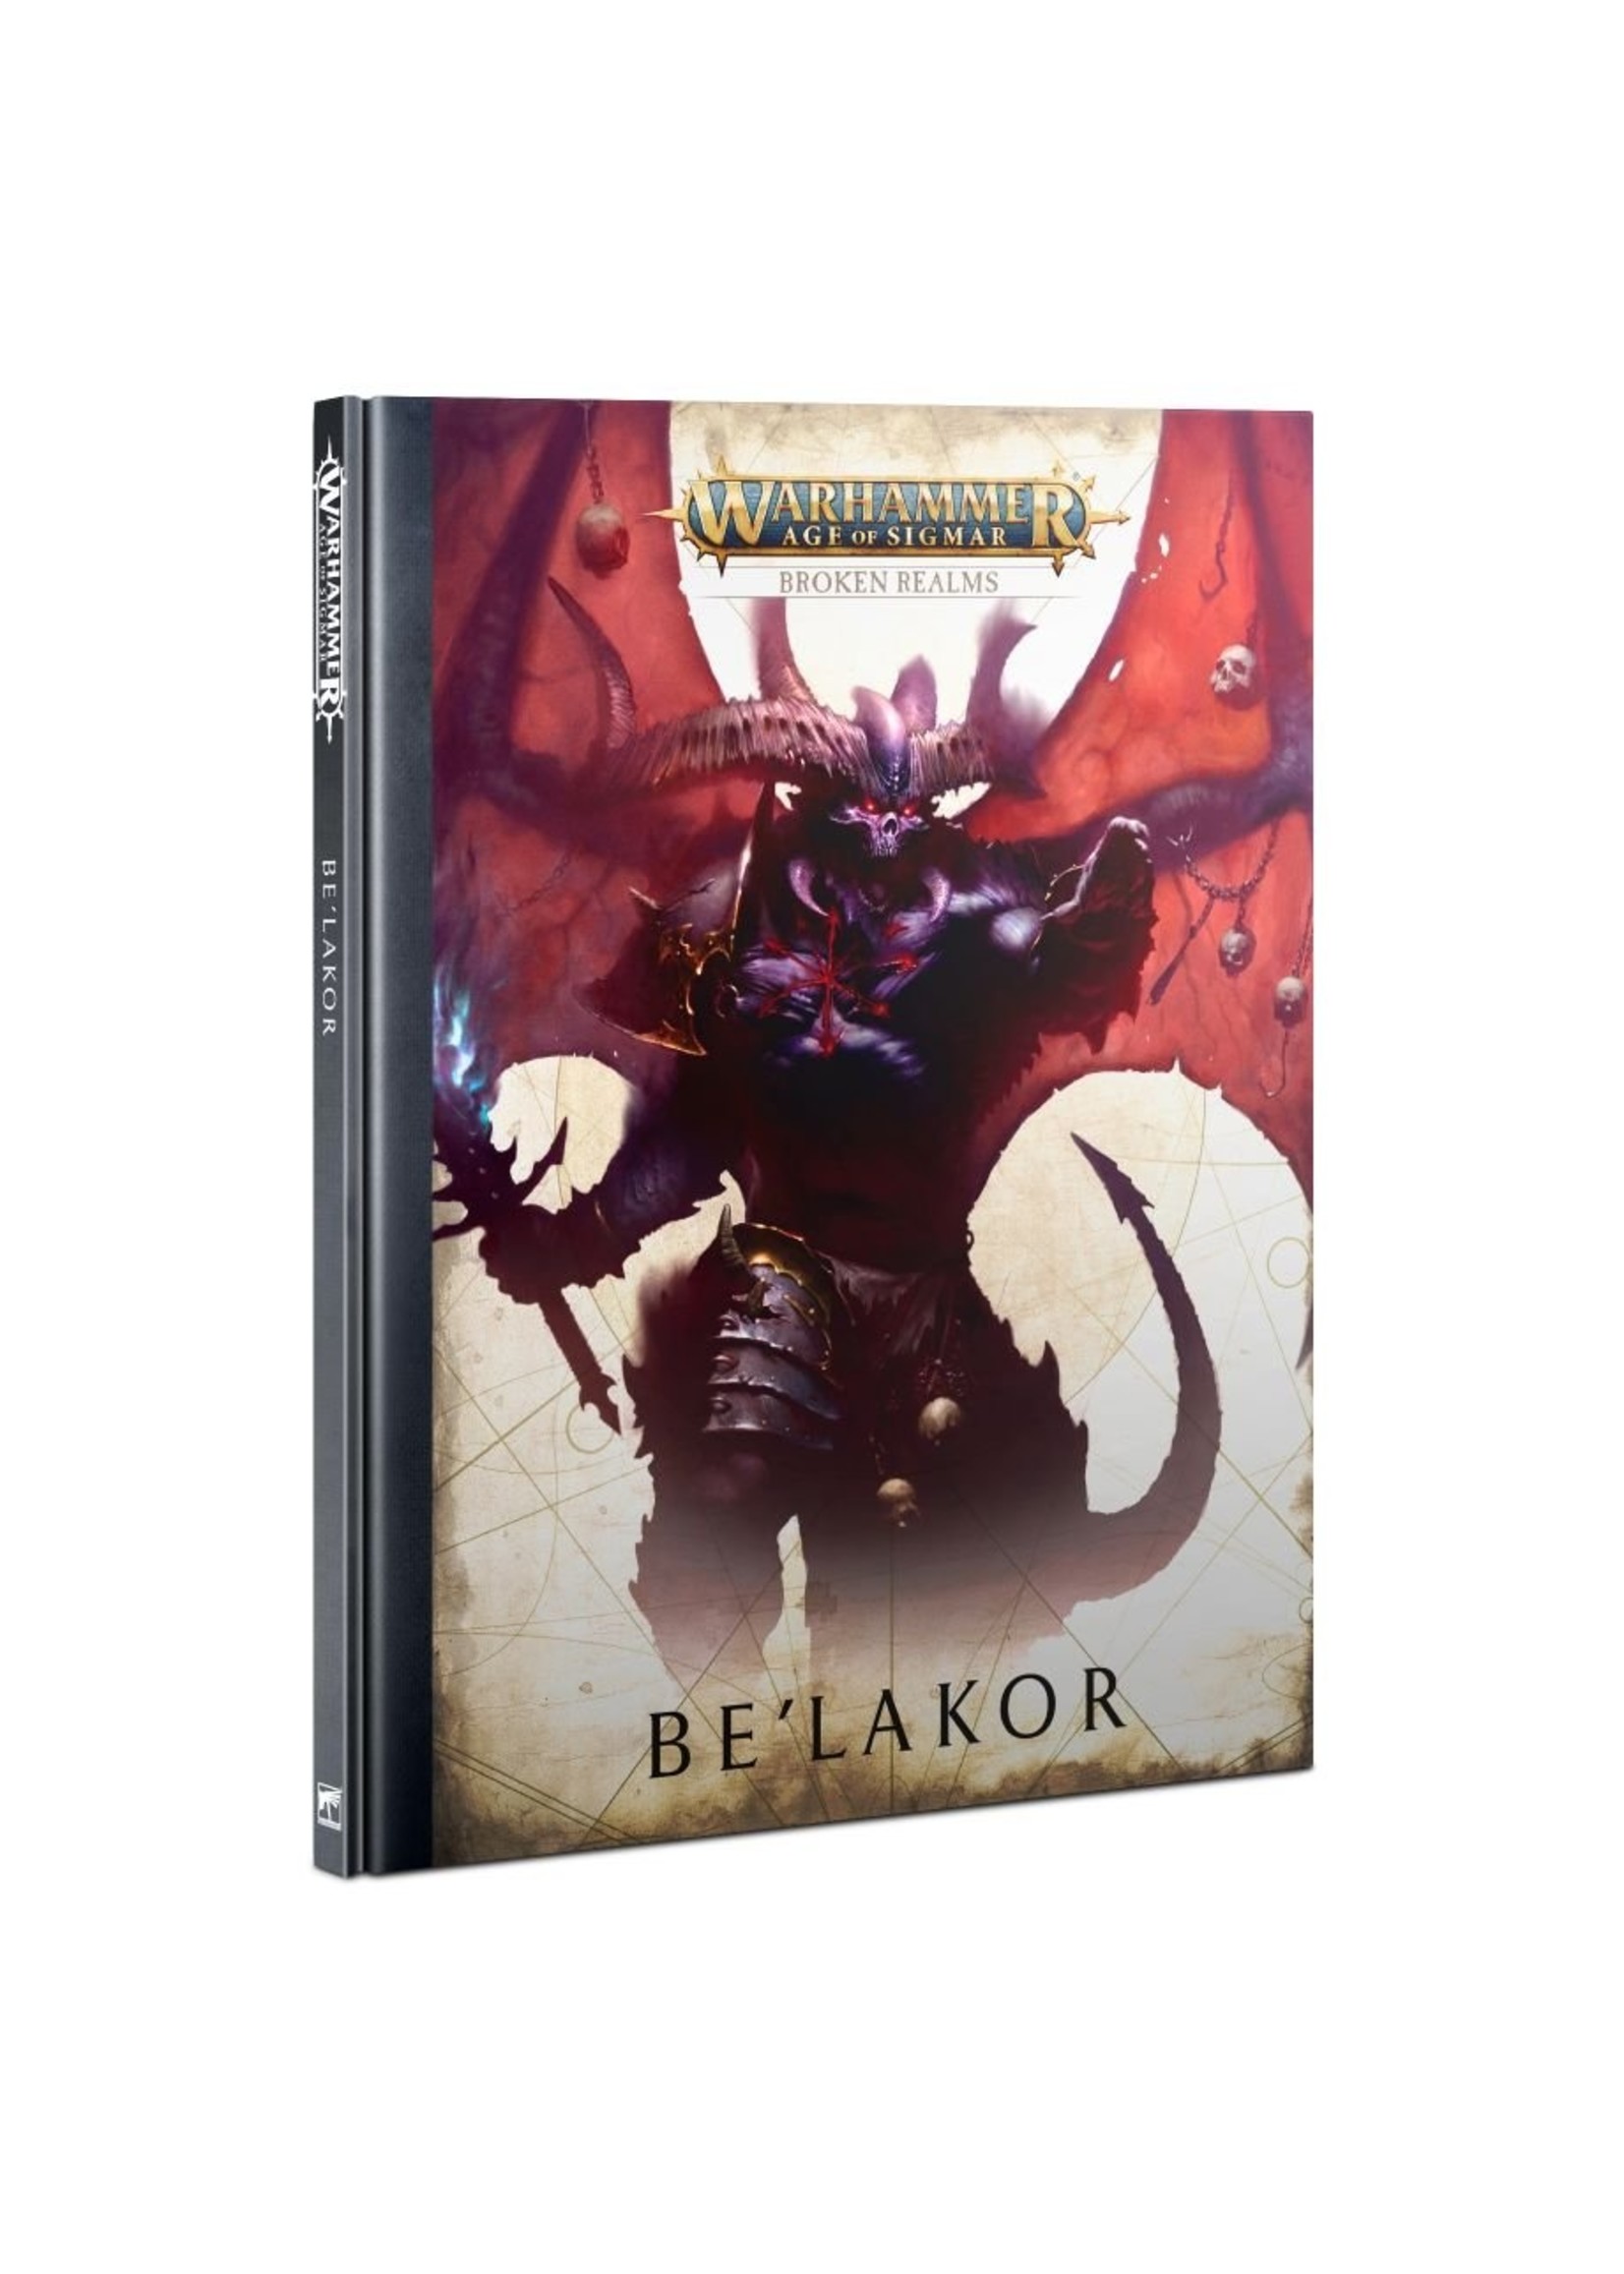 Warhammer Age of Sigmar: Broken Realms - Be'lakor (Hardcover)